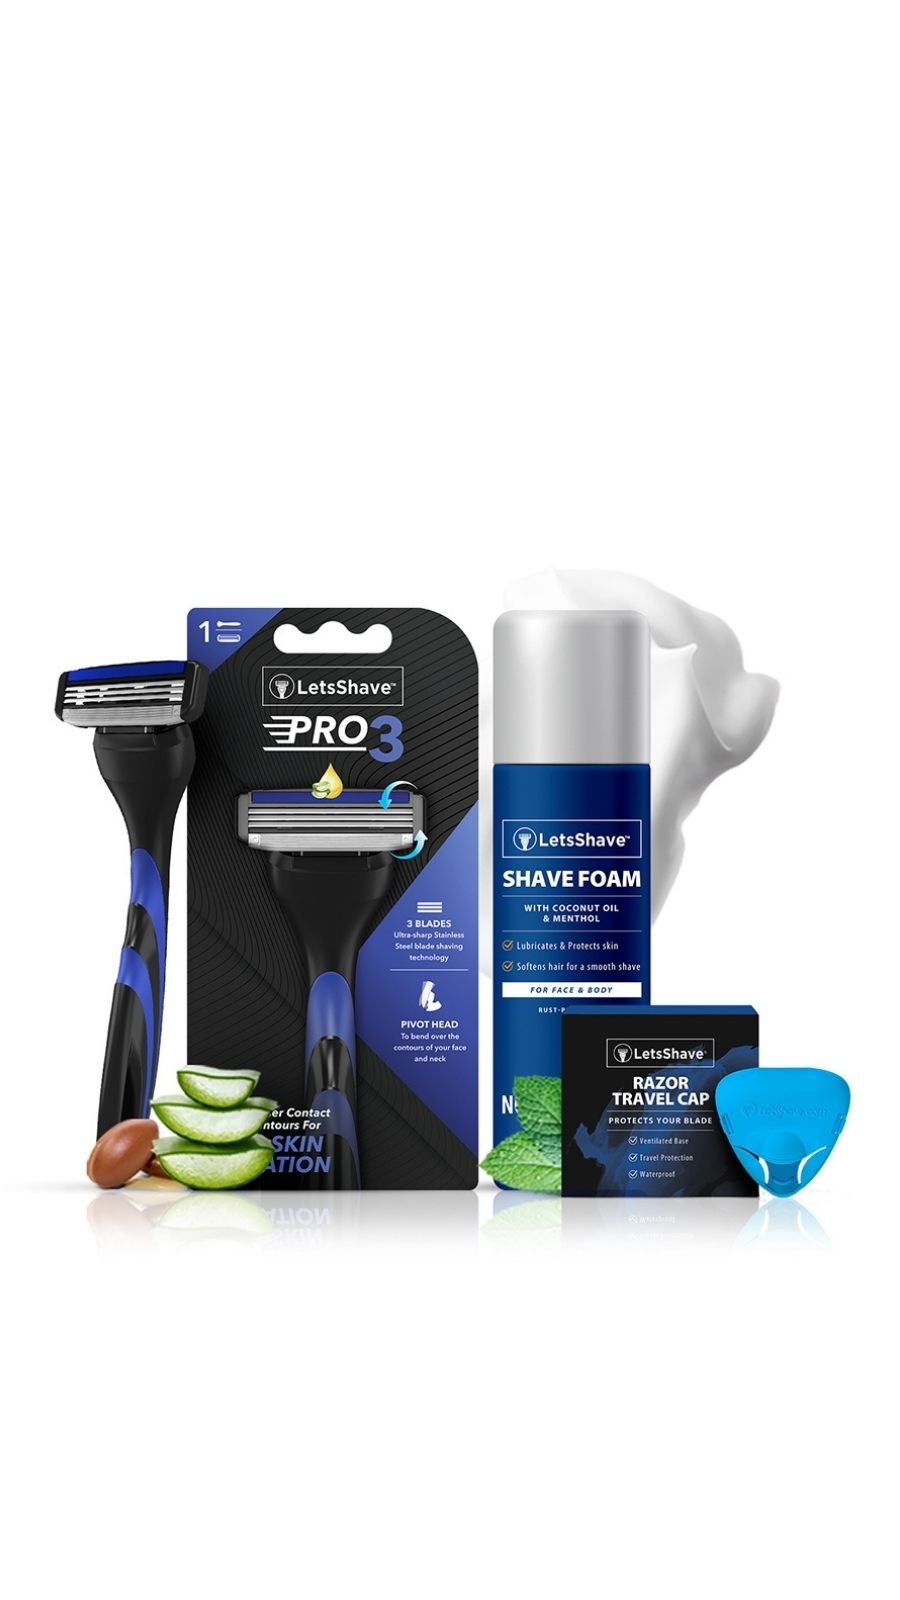 LetsShave | LetsShave Pro 3 Razor Trial Kit for Men - Pro 3 Blade + Razor Handle + Shave Foam - 200 gm